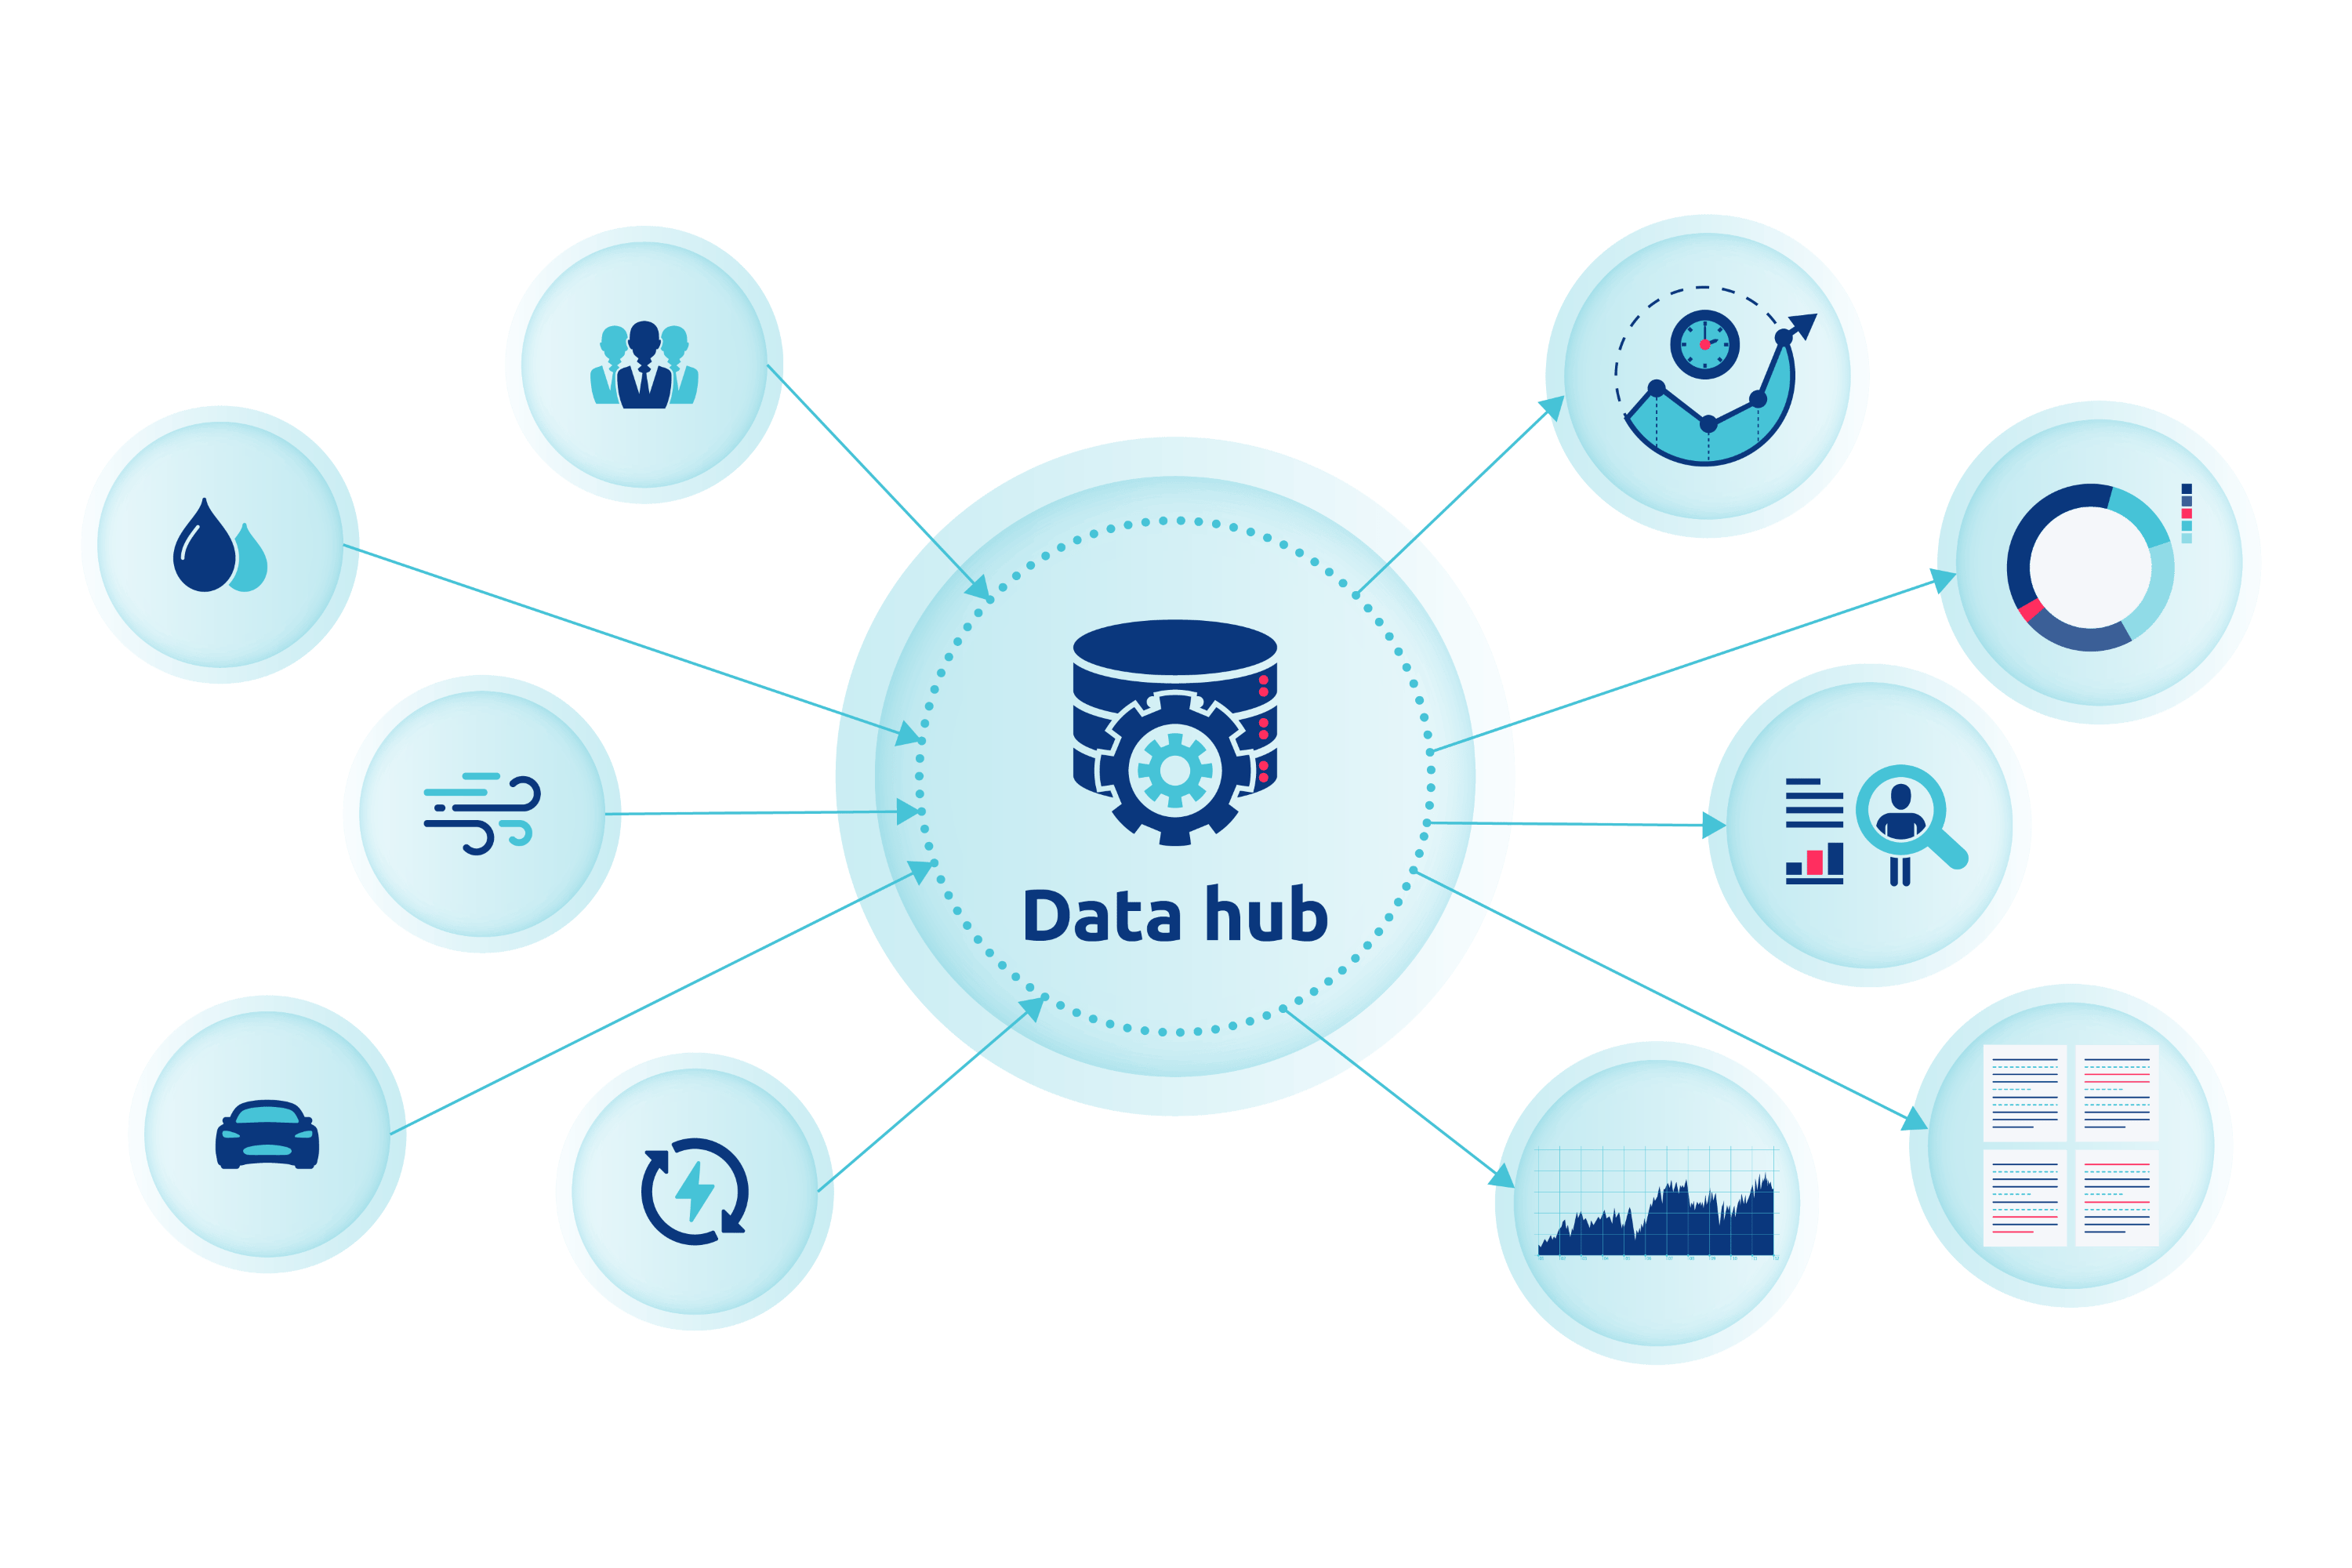 Data hub illustration for a blogpost